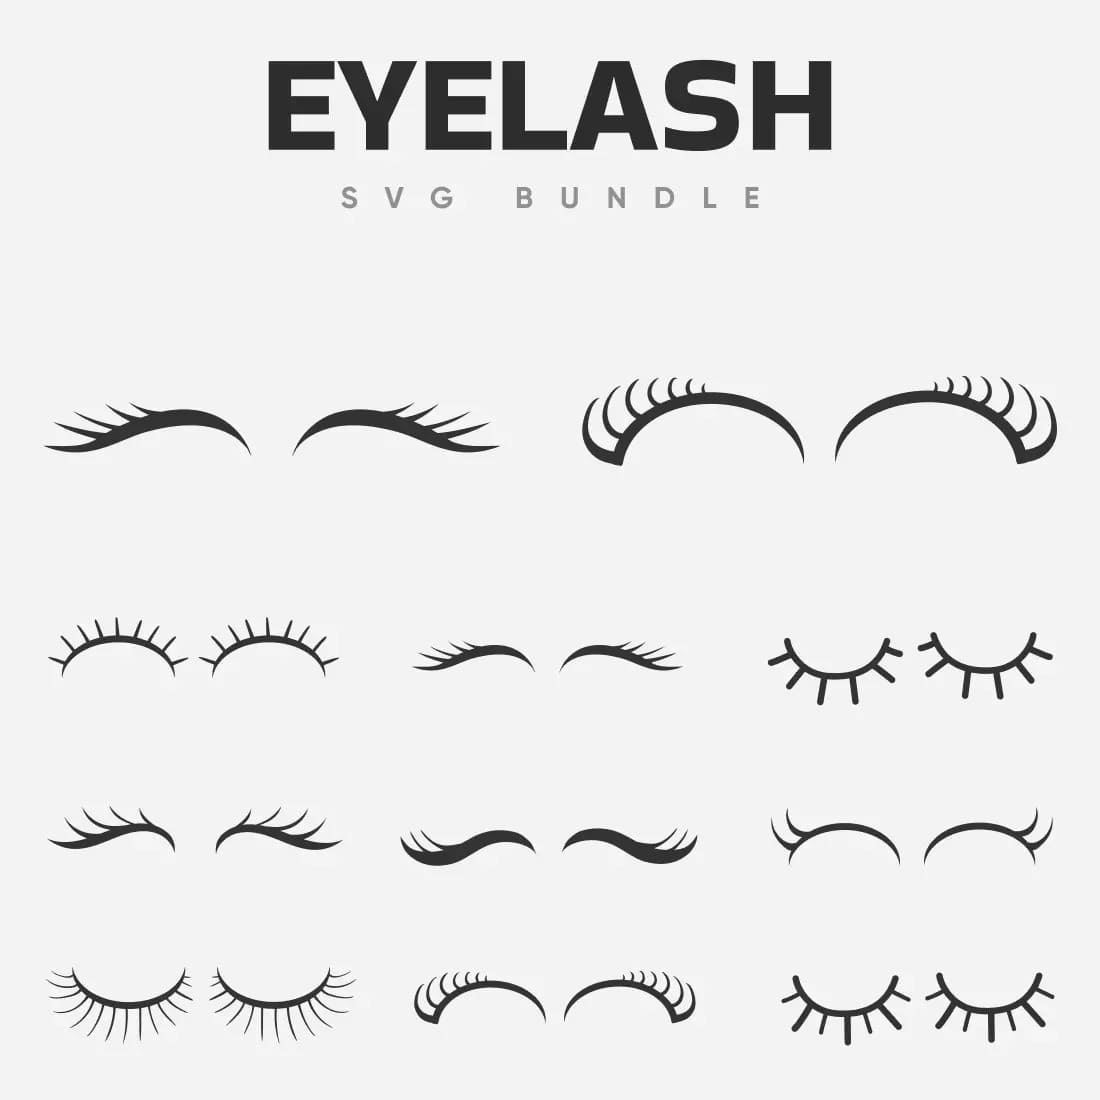 Eyelash SVG Bundle Preview 5.